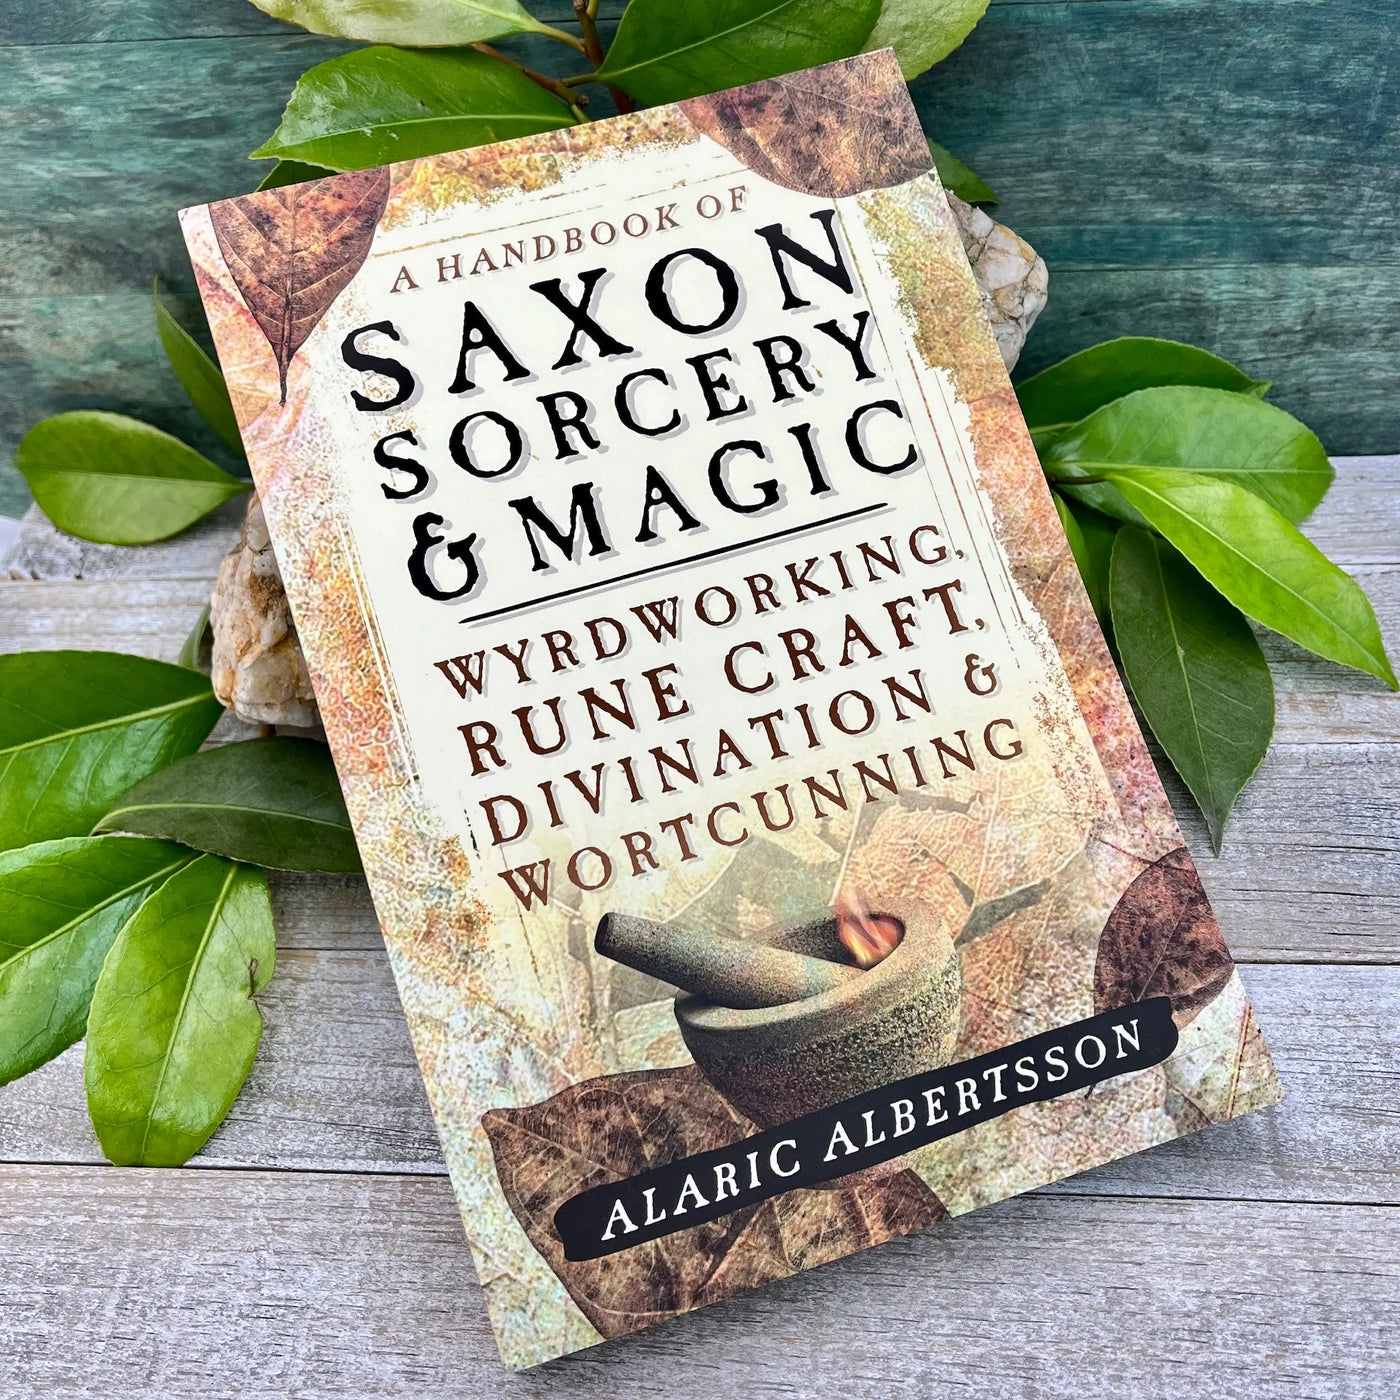 A Handbook of Saxon Sorcery & Magic: Wyrdworking, Rune Craft, Divination, and Wortcunning